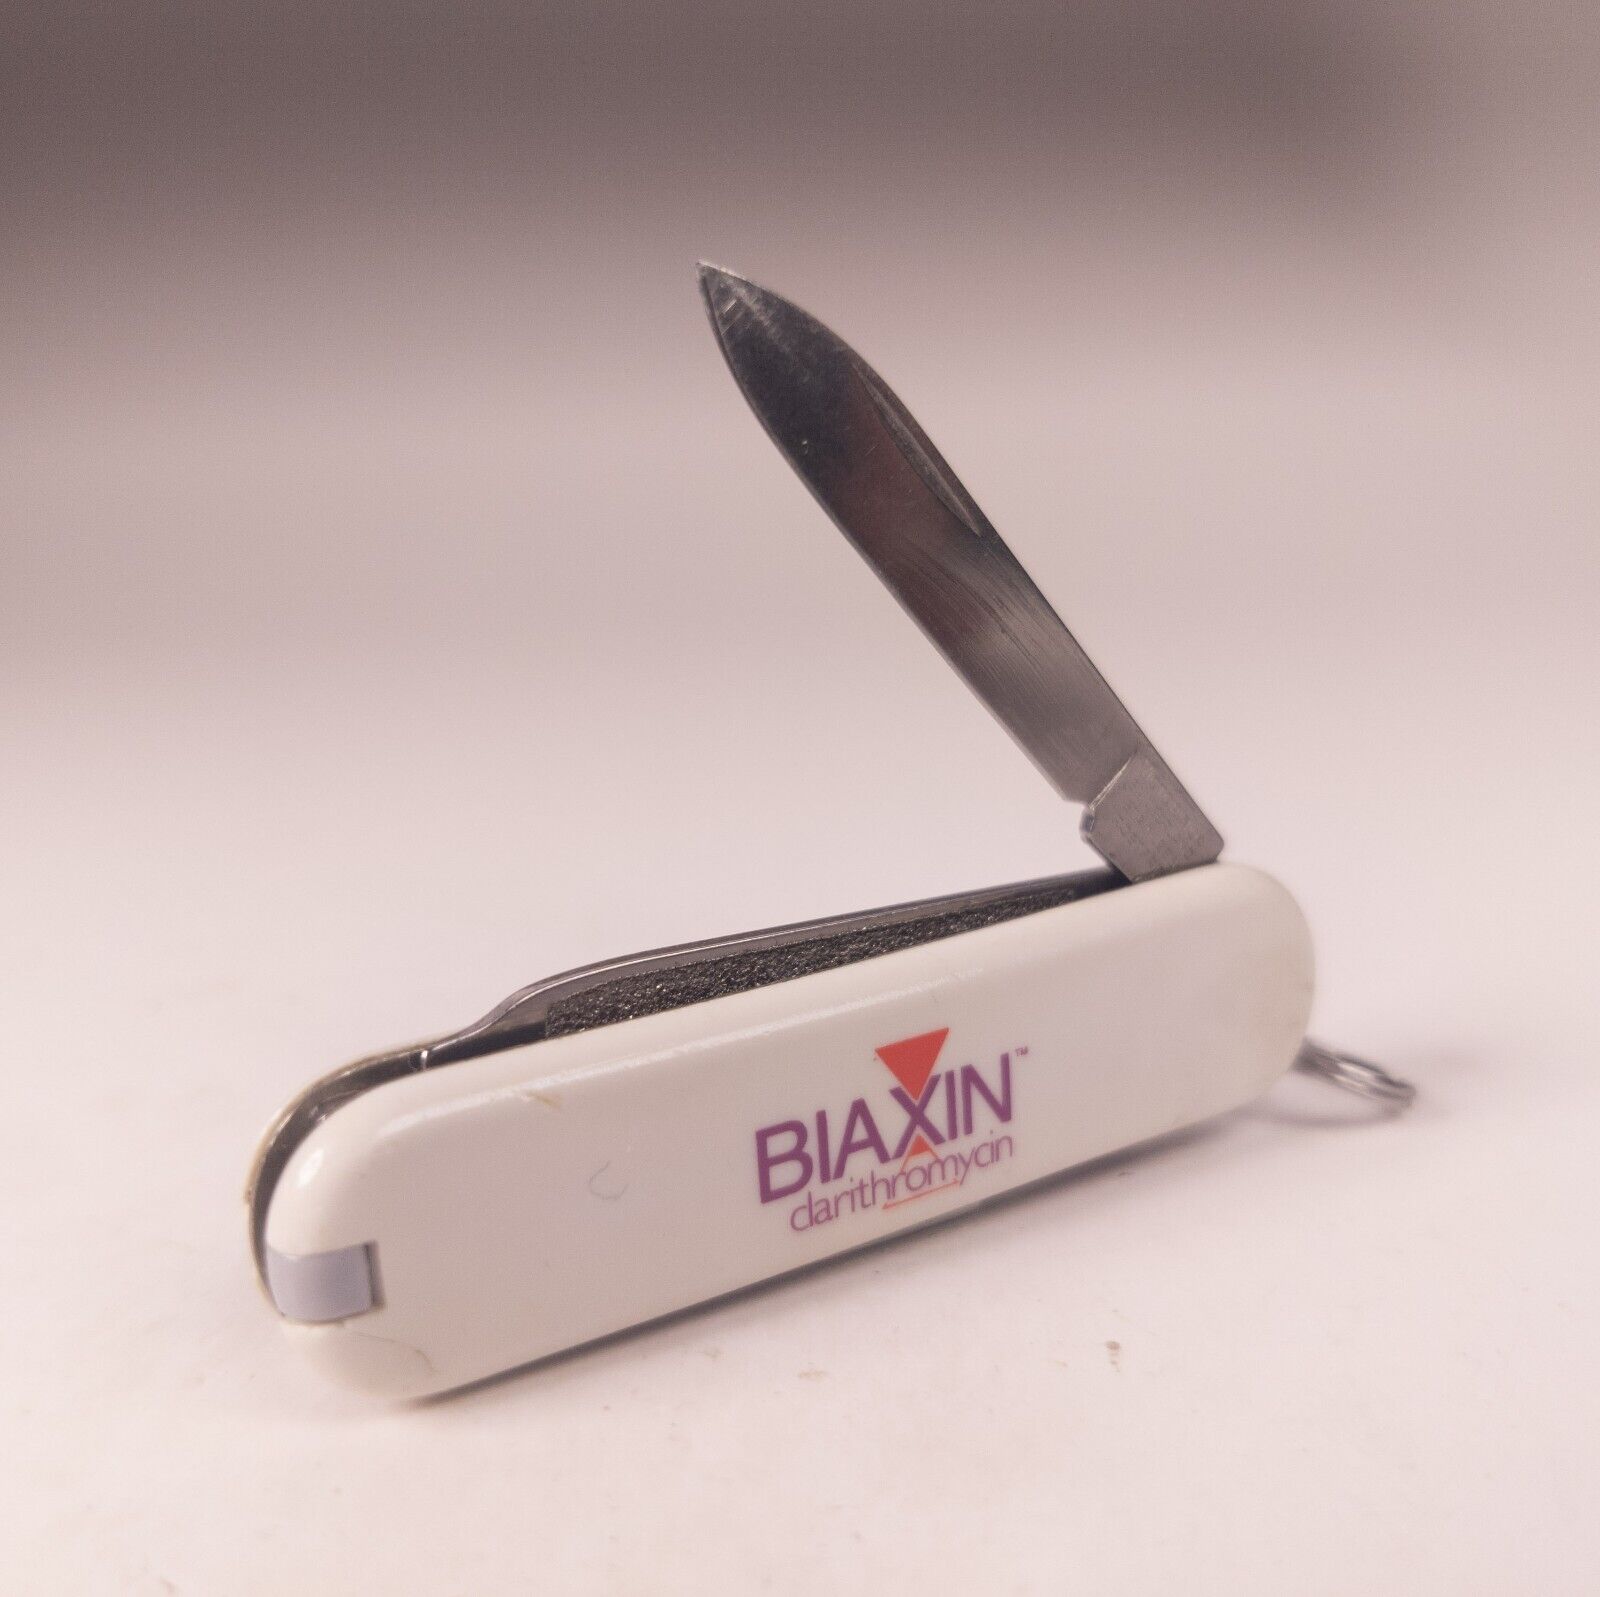 BIAXIN Logo Victorinox Swiss Army Knife Classic SD White 58mm